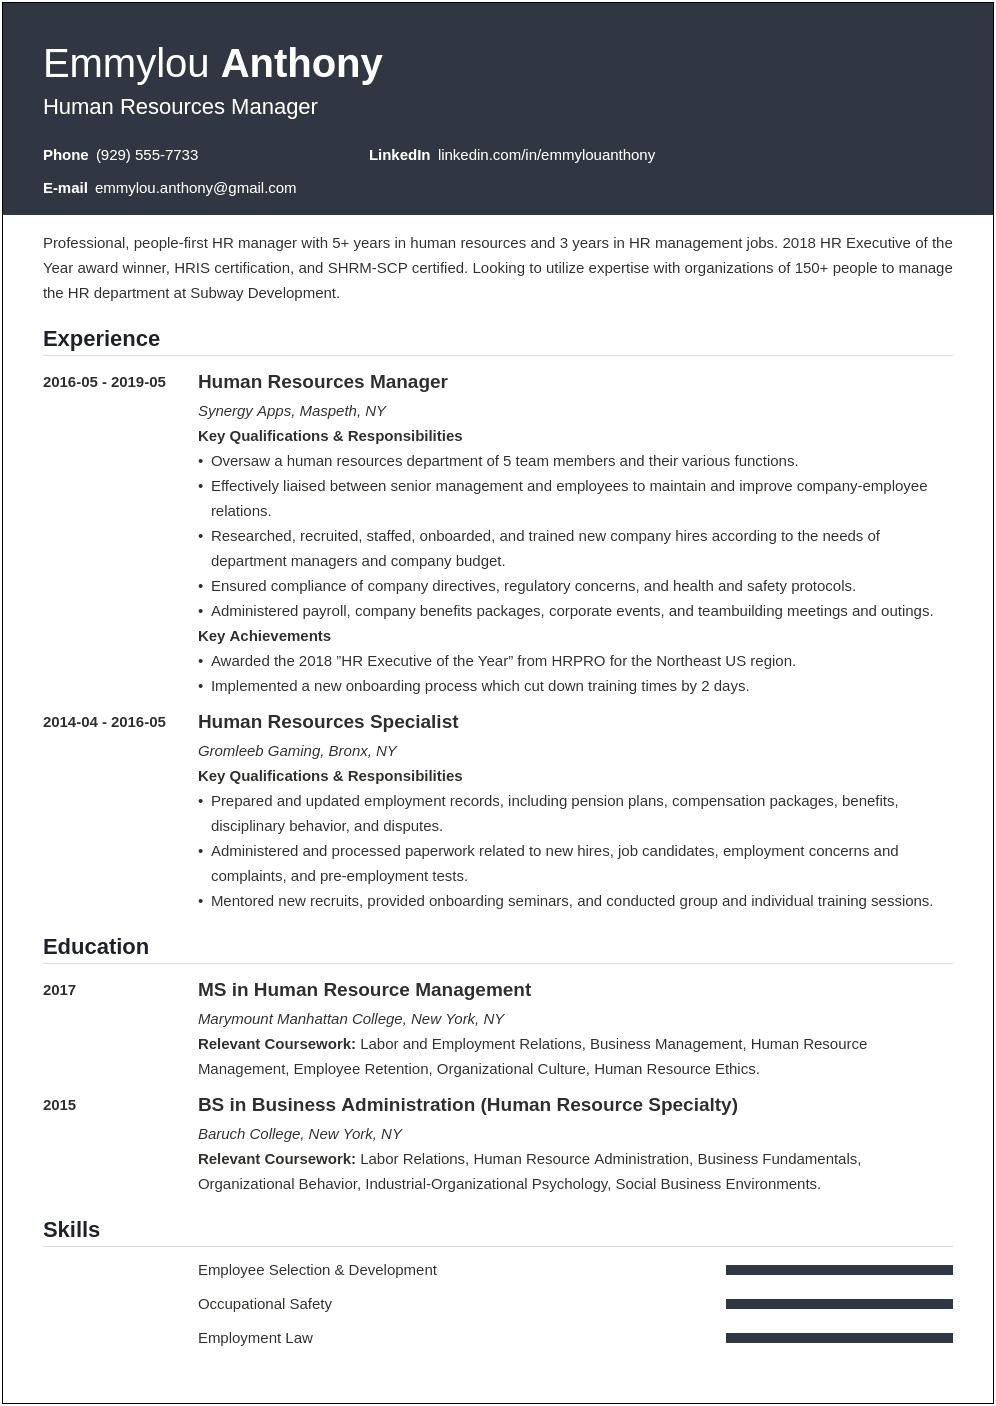 Human Resource Officer Job Description For Resume